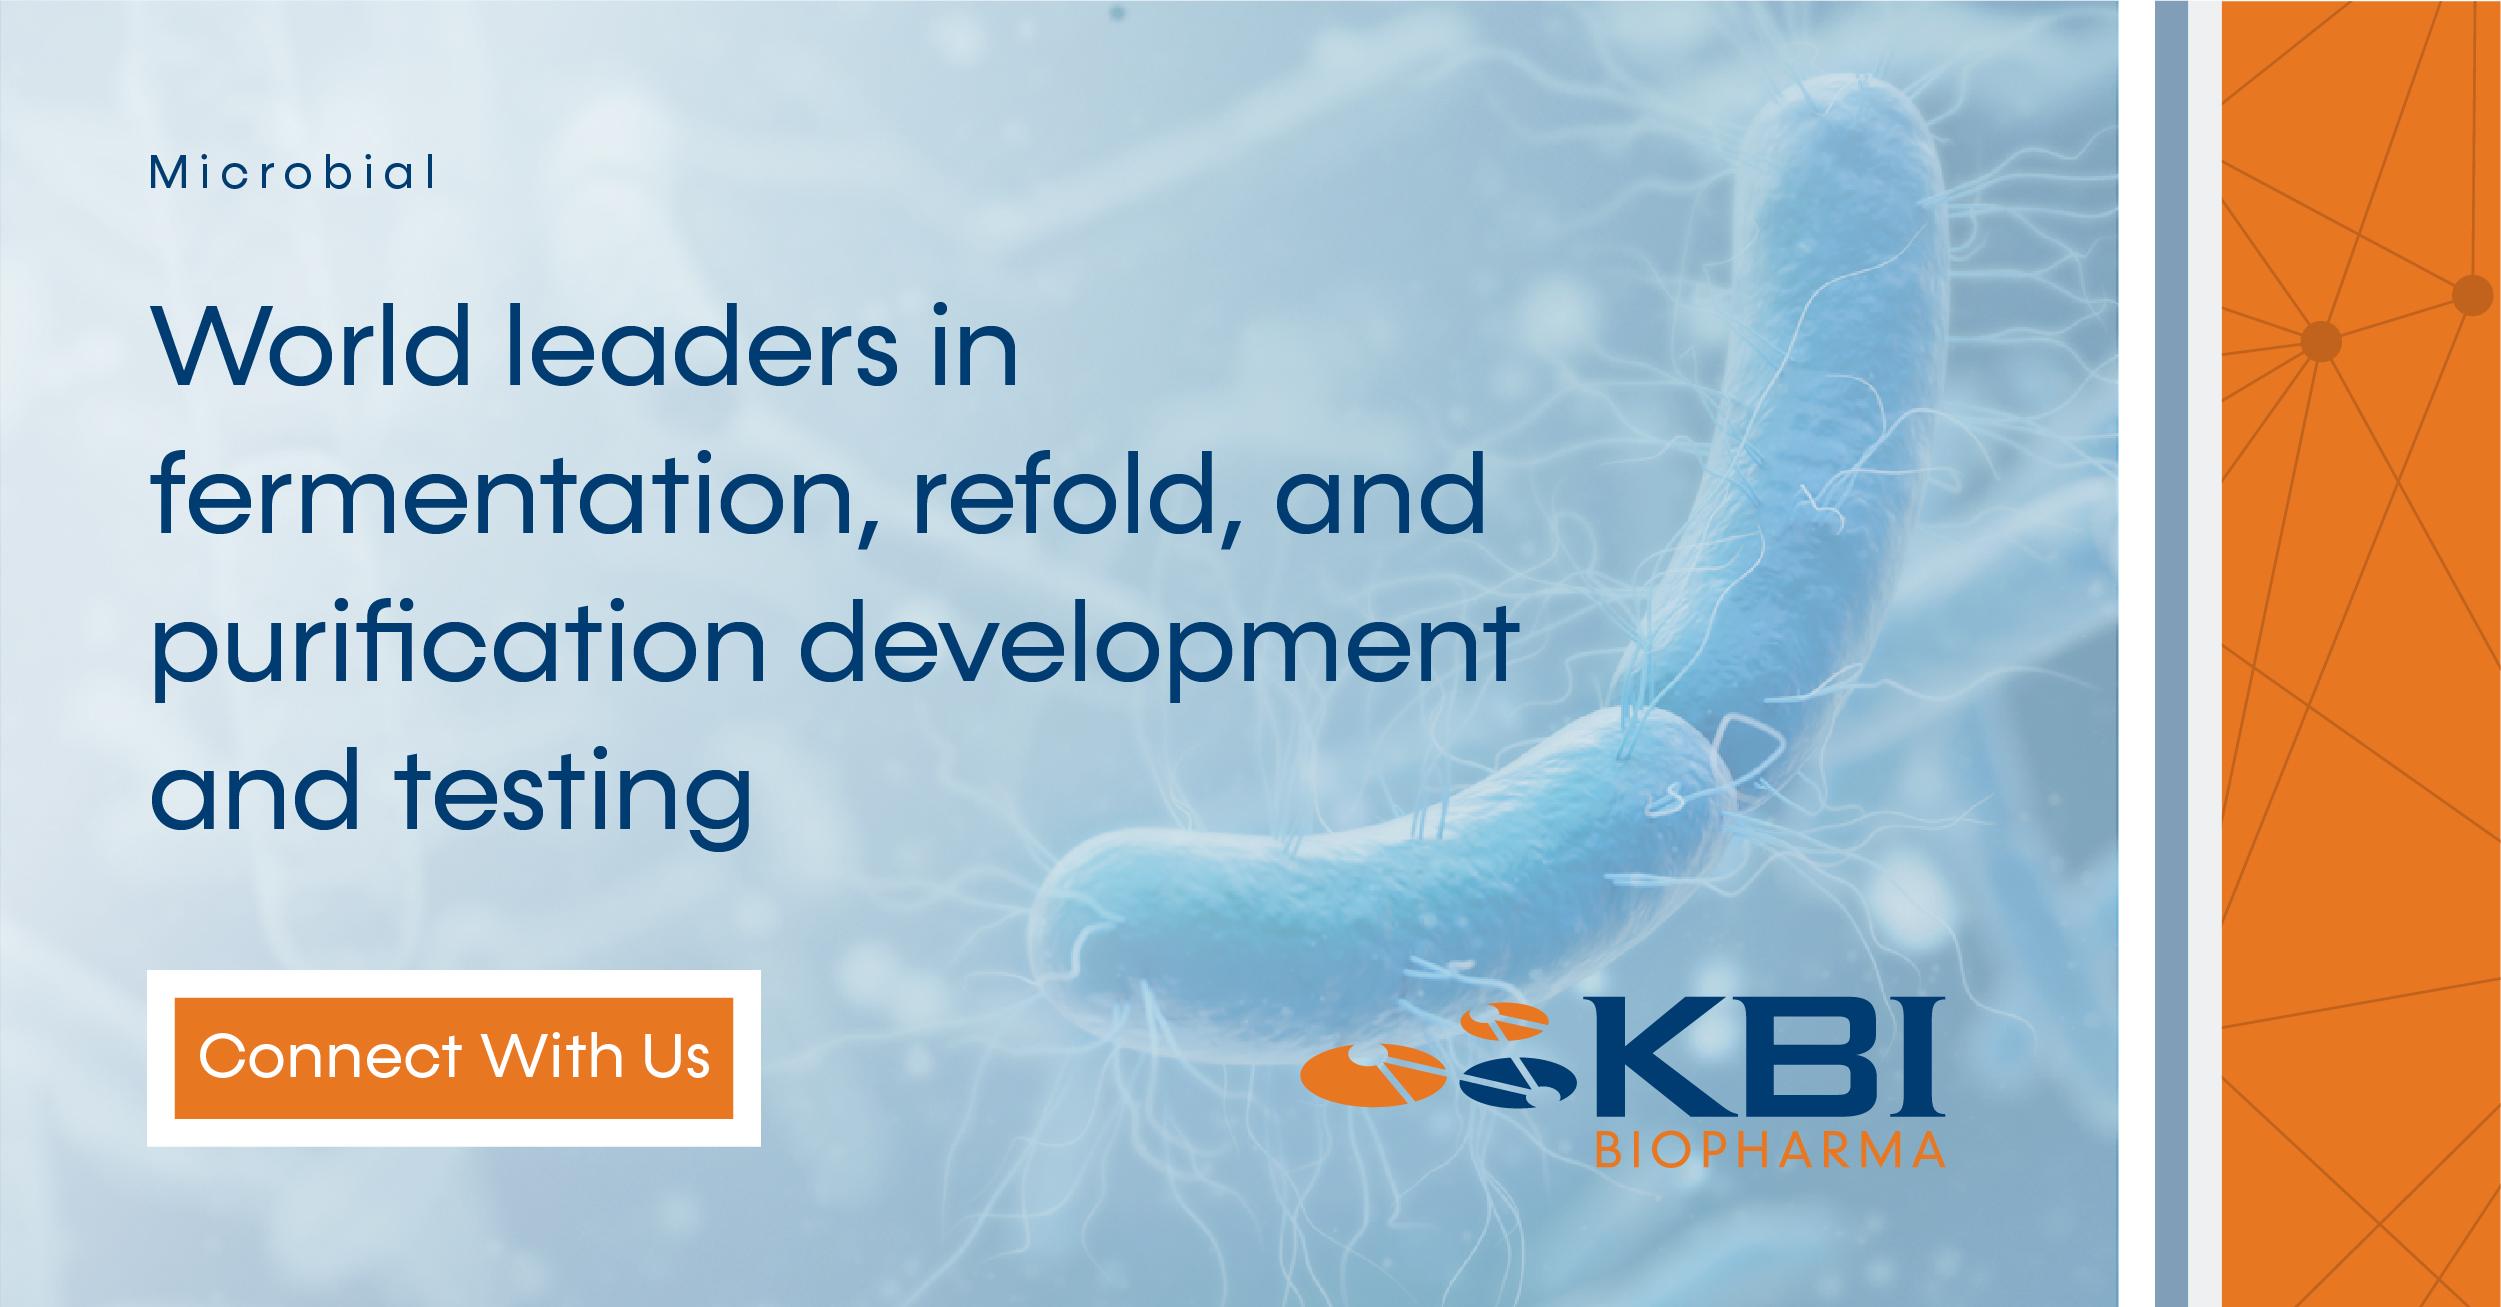 Product Microbial Cell Line Development - KBI Biopharma image